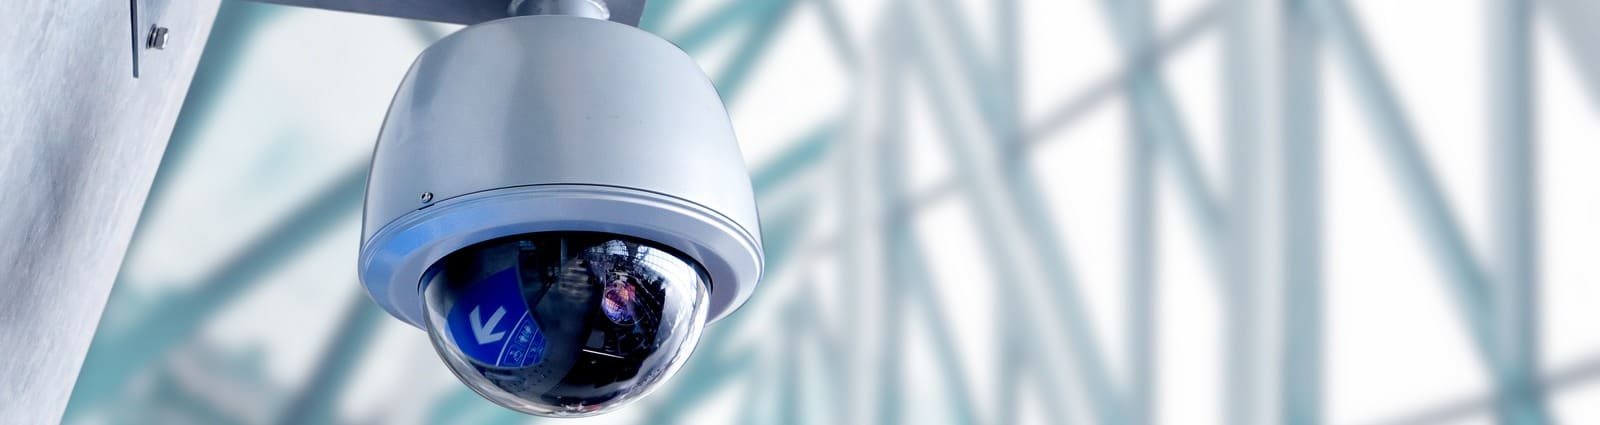 Dome Caméra de surveillance